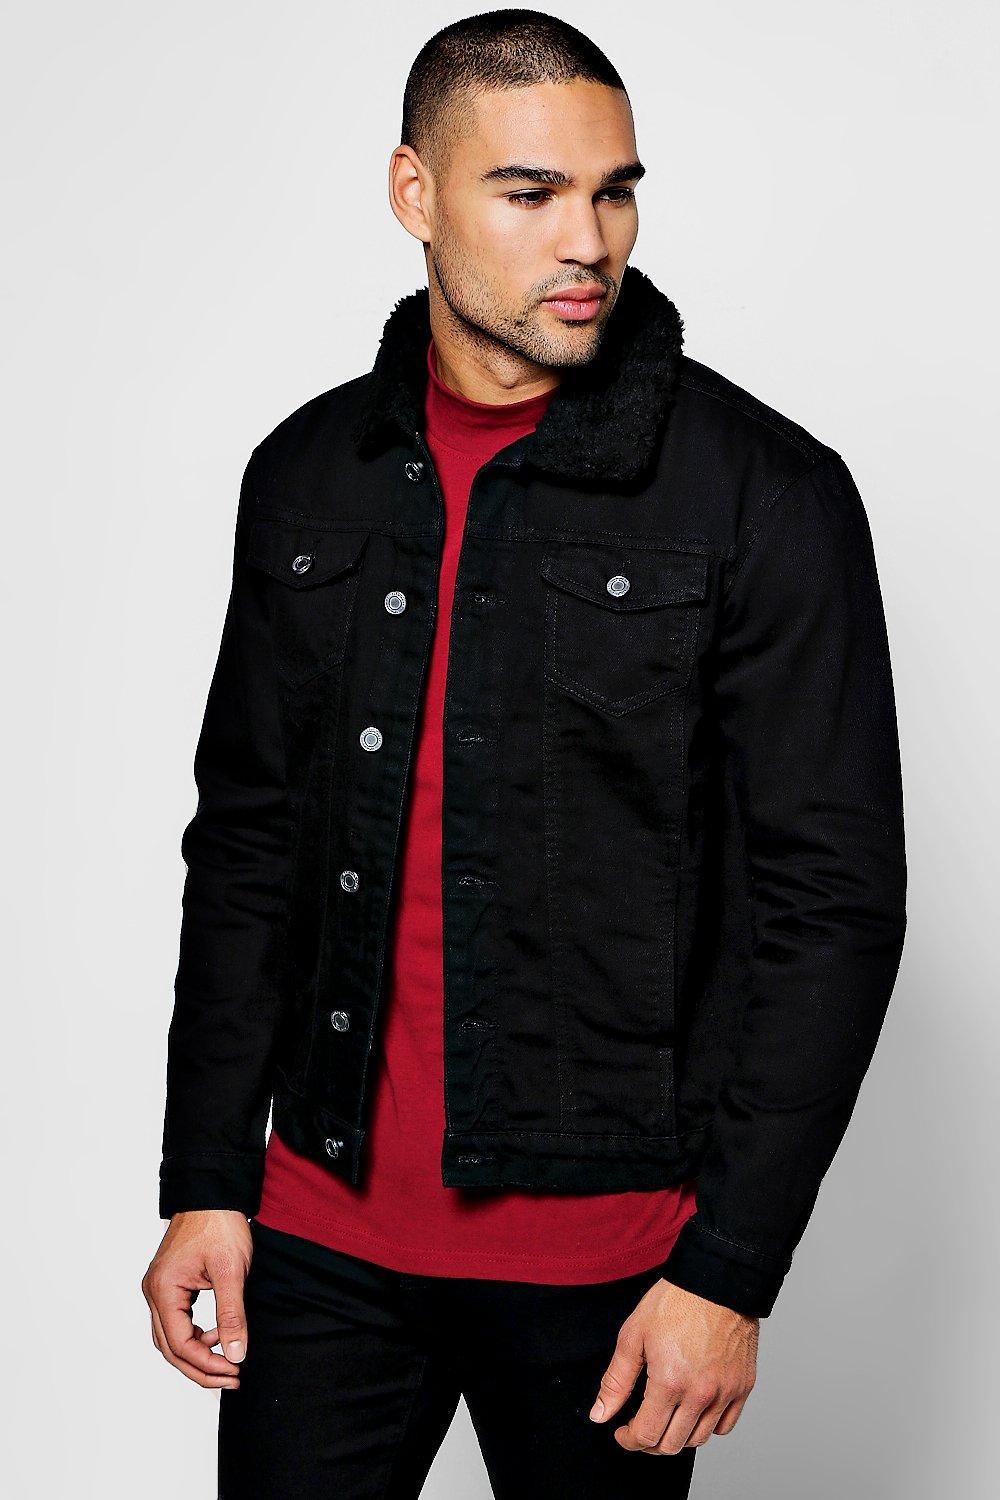 black denim jacket with fur collar